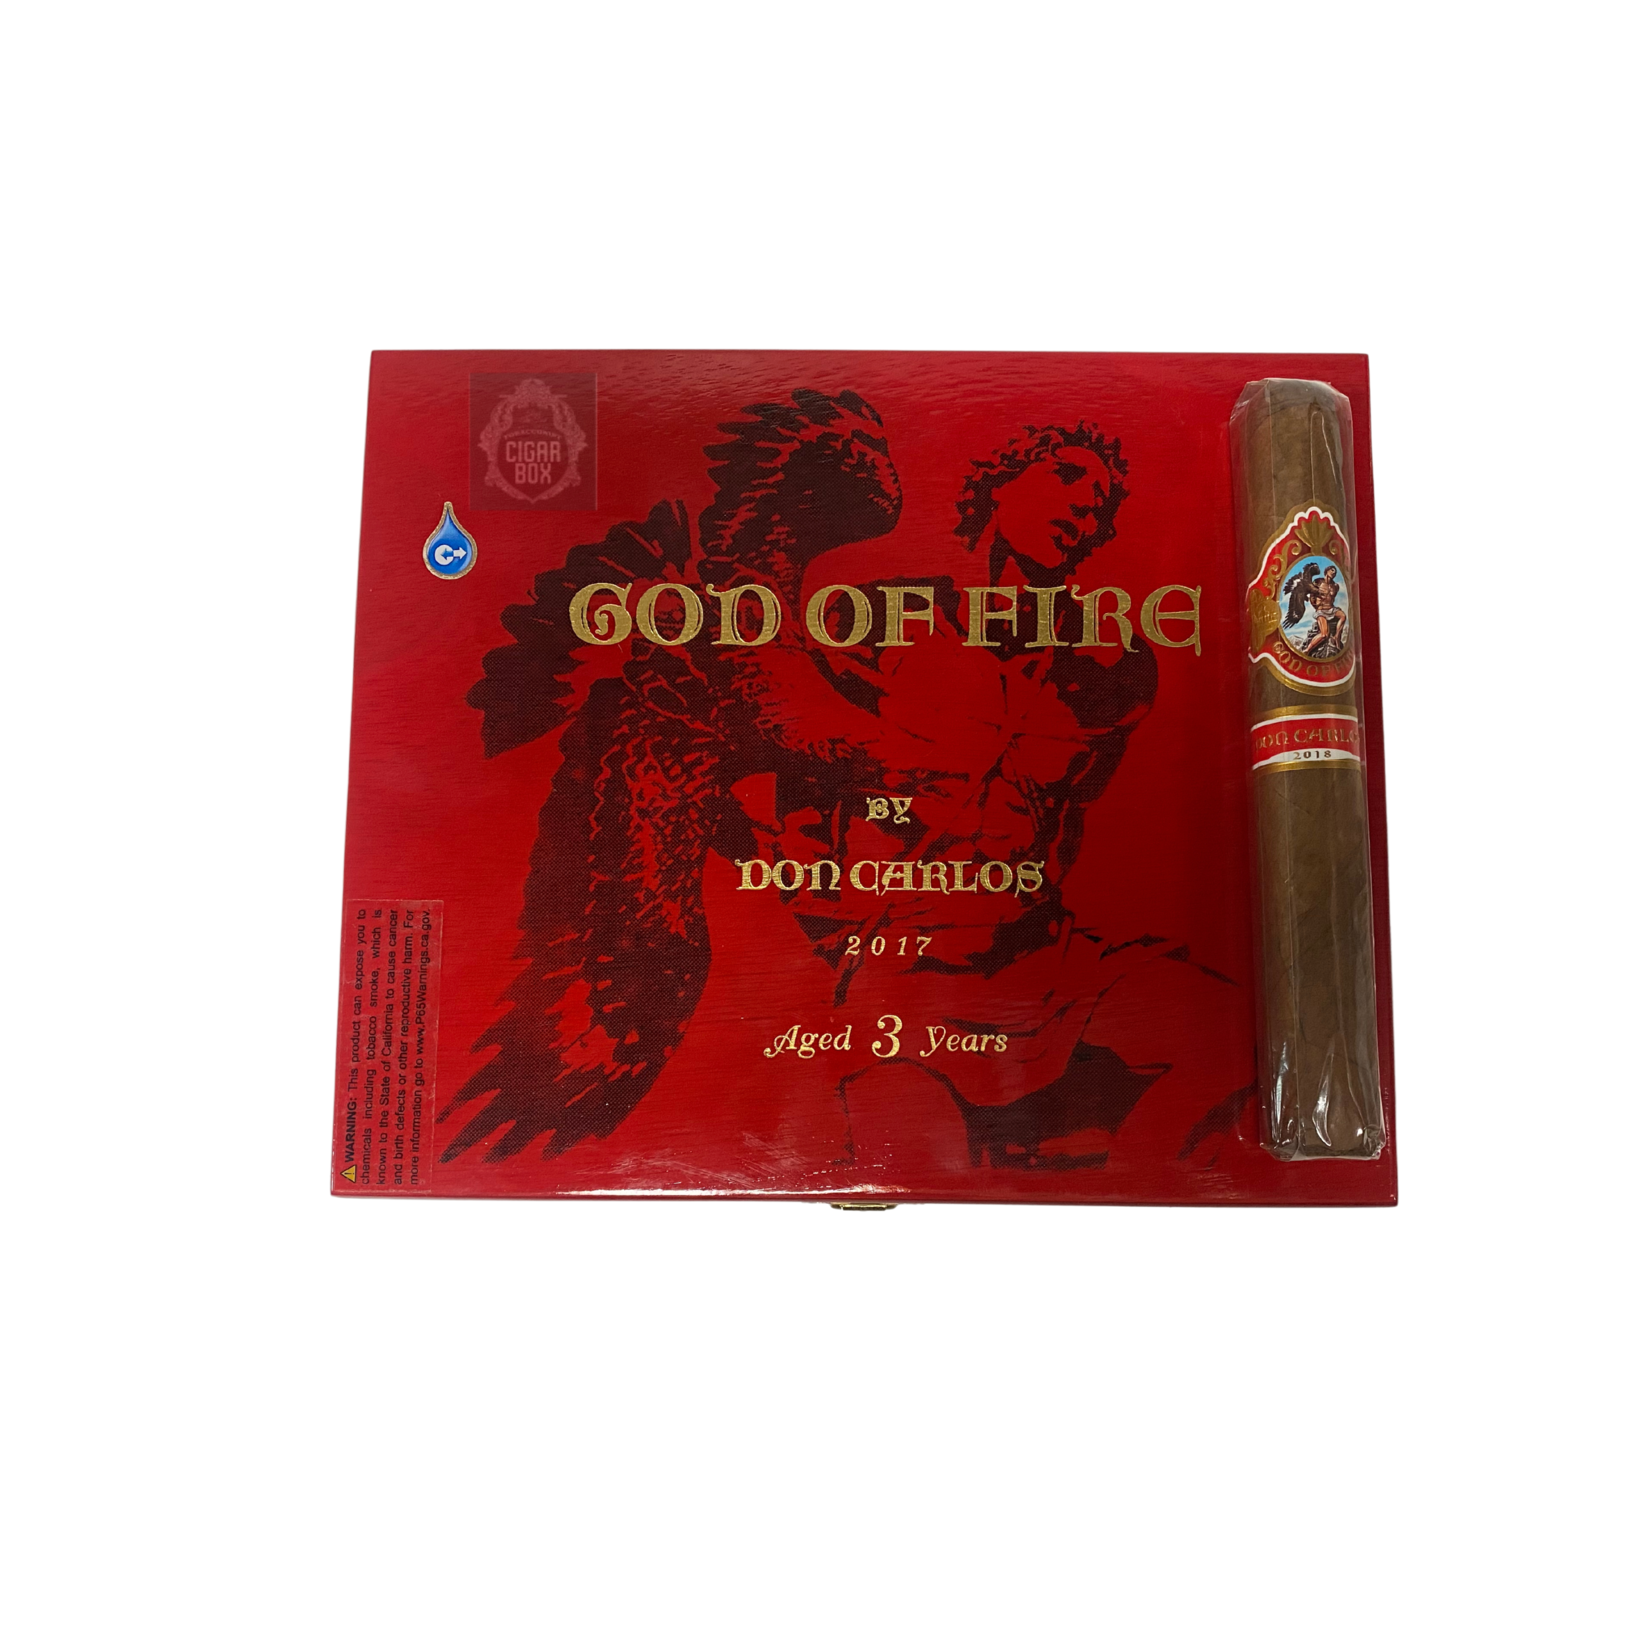 God of Fire God of Fire Don Carlos Toro Box